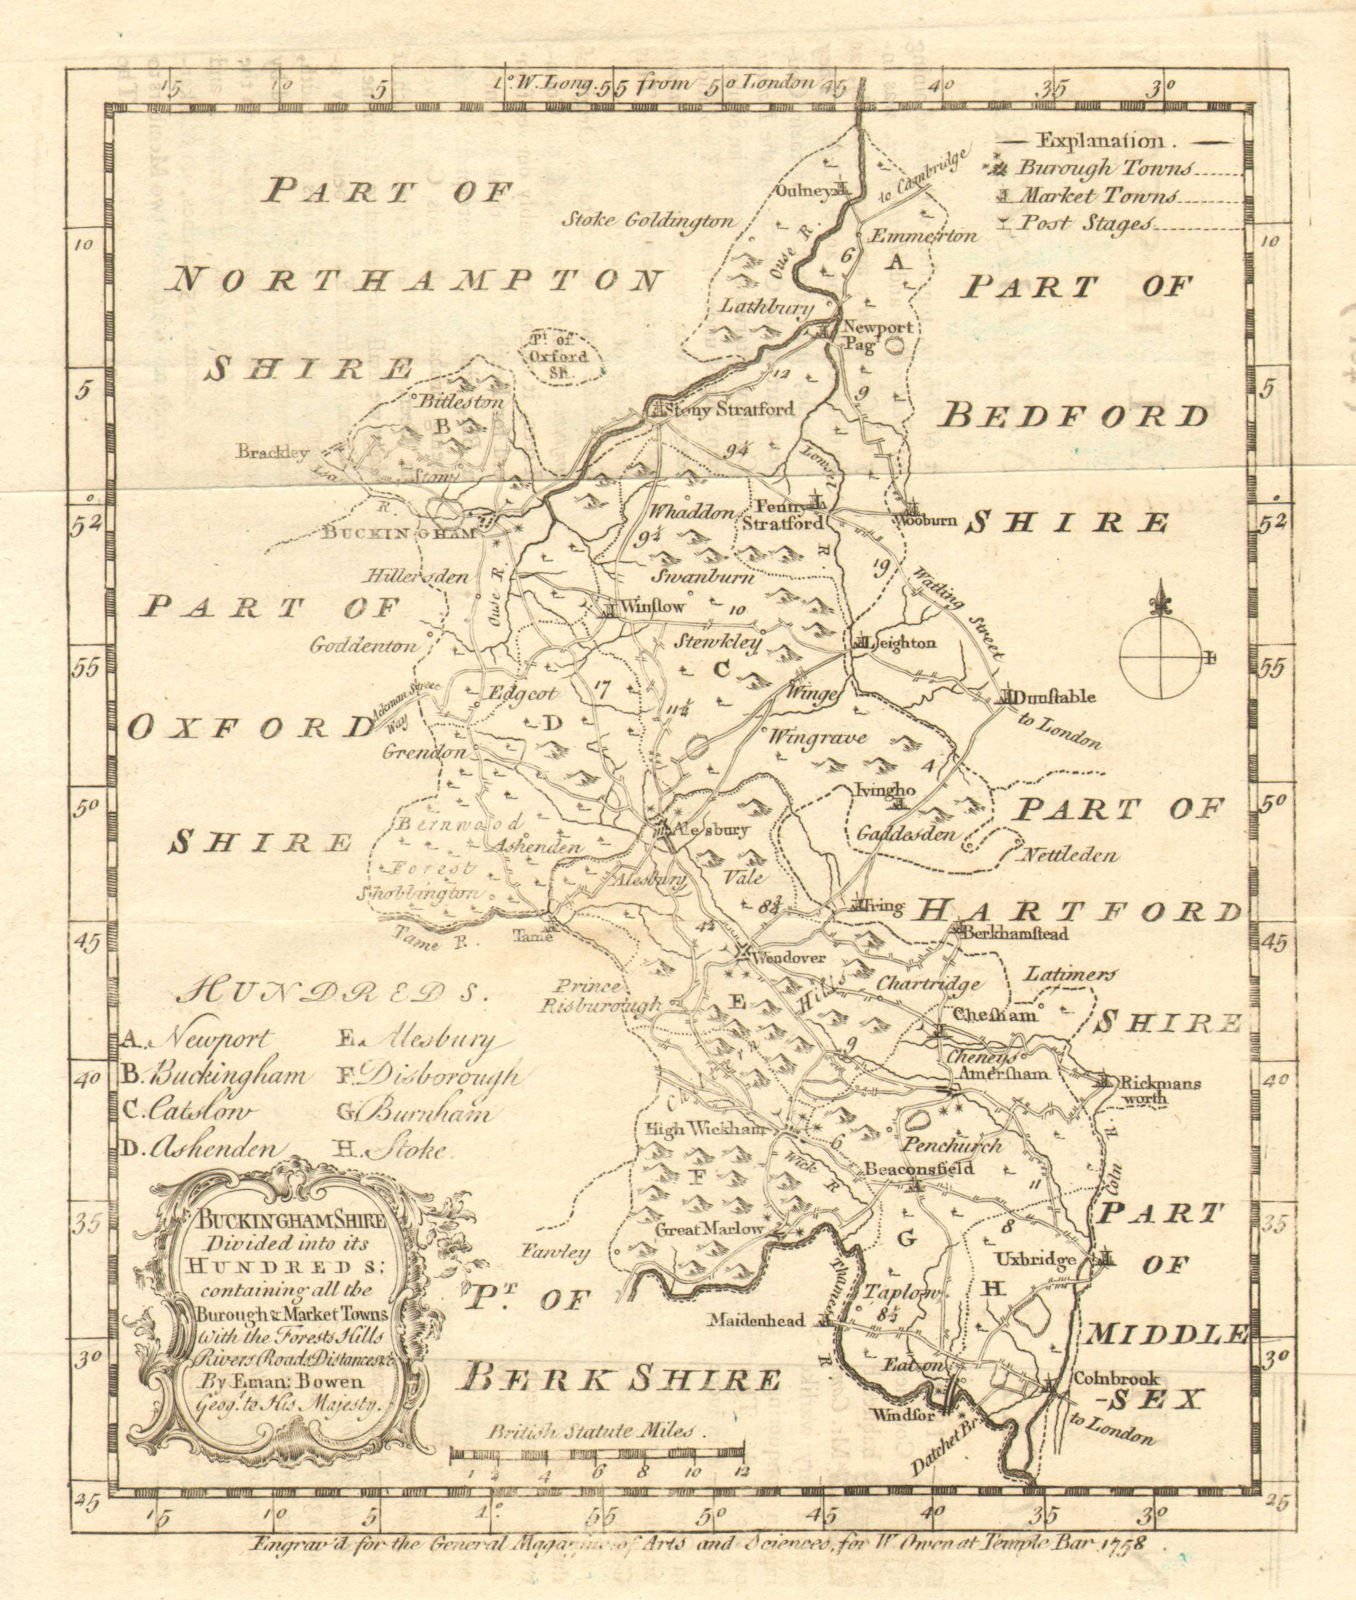 Antique map of Buckinghamshire by Emmanuel Bowen 1758 old chart